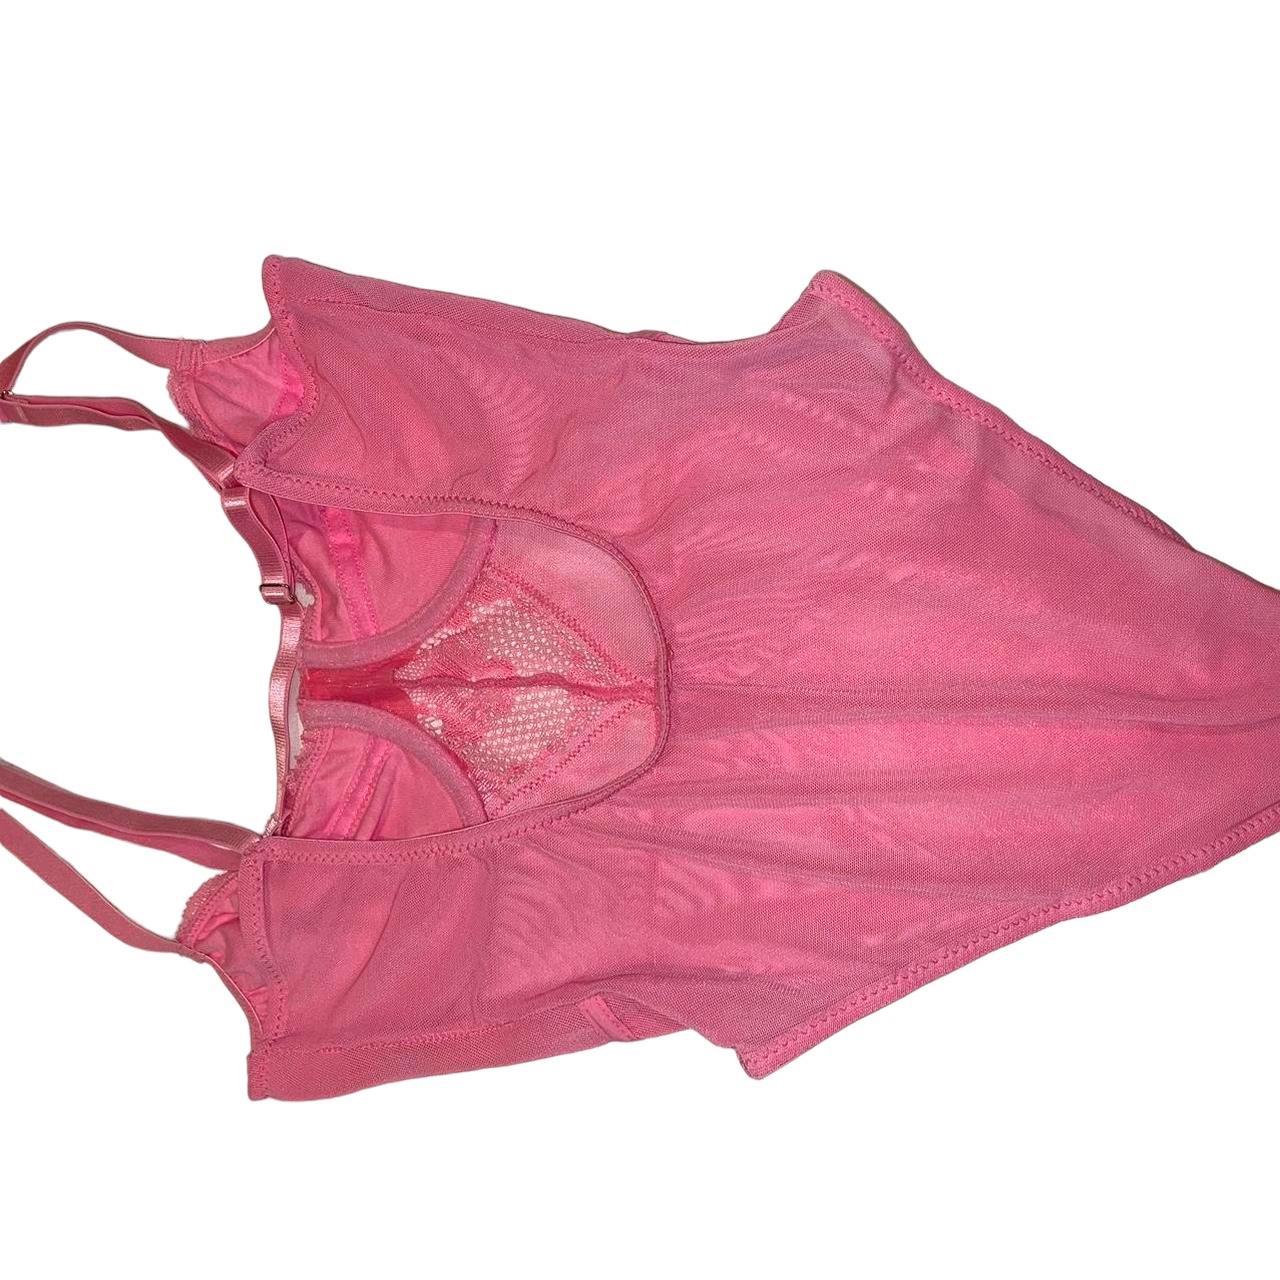 Lounge intimates lace pink bodysuit. Size XS would - Depop